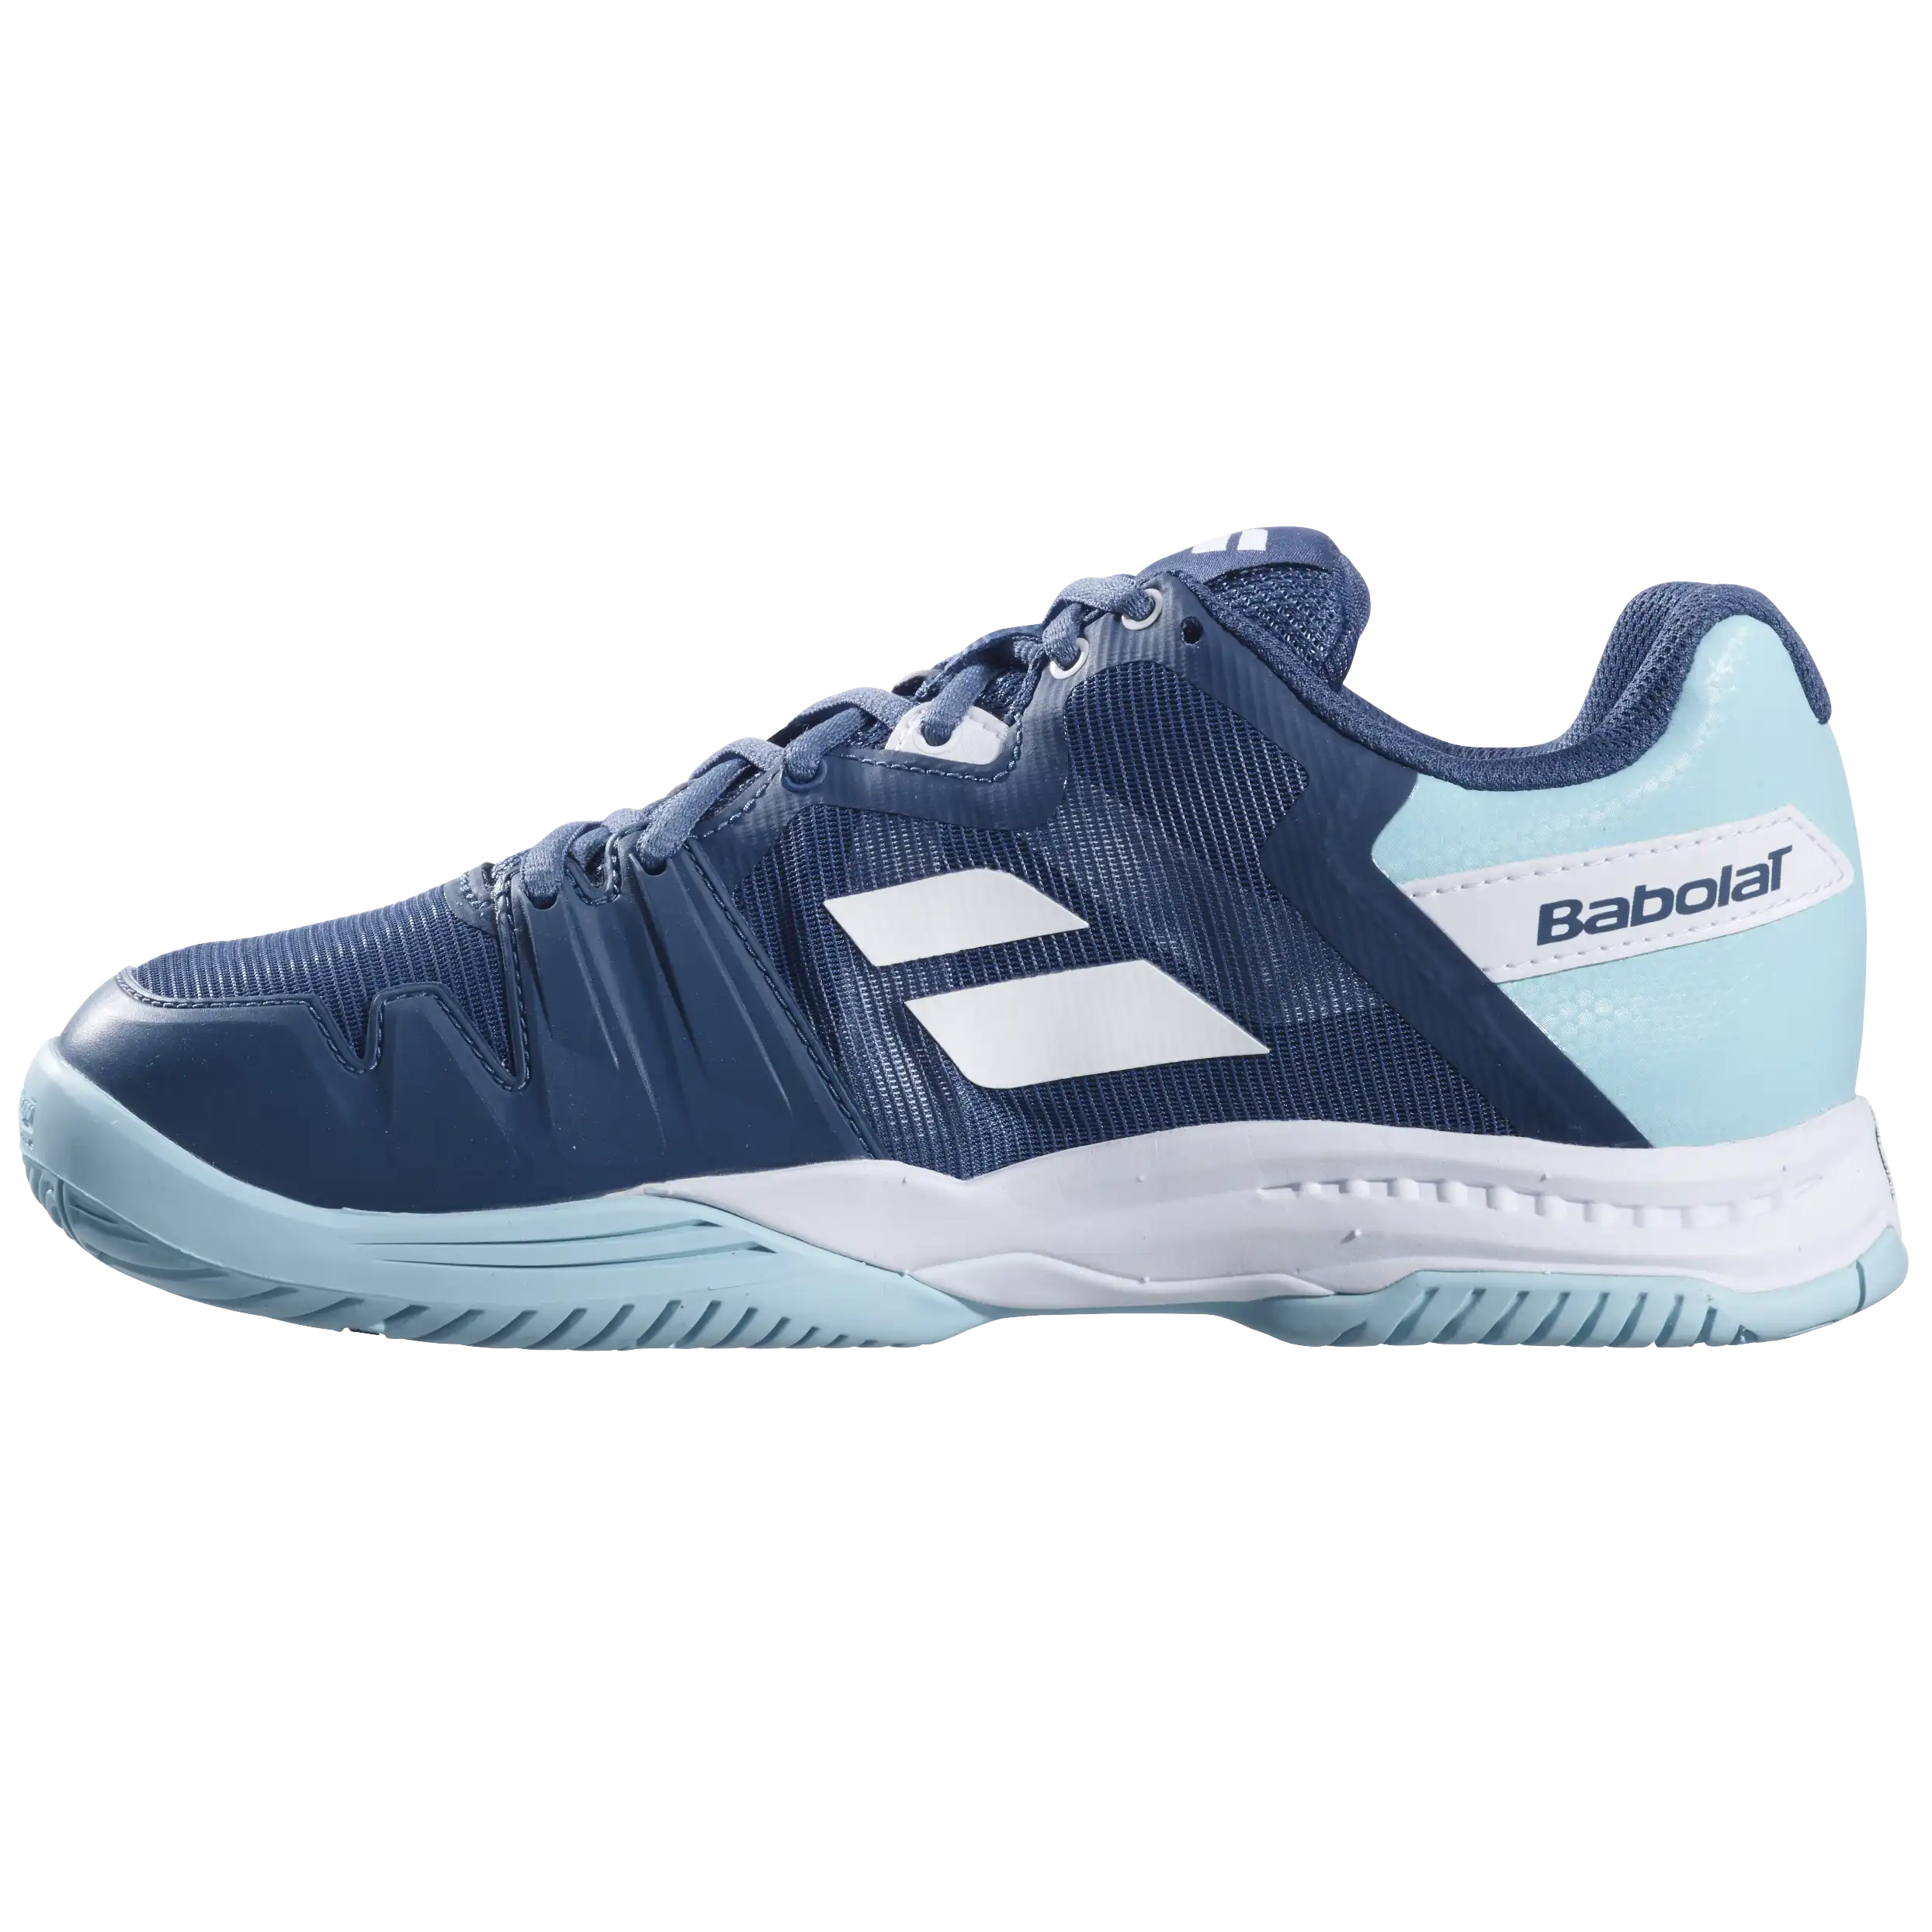 Babolat Women's SFX 3 All Court Tennis Shoe In Blue